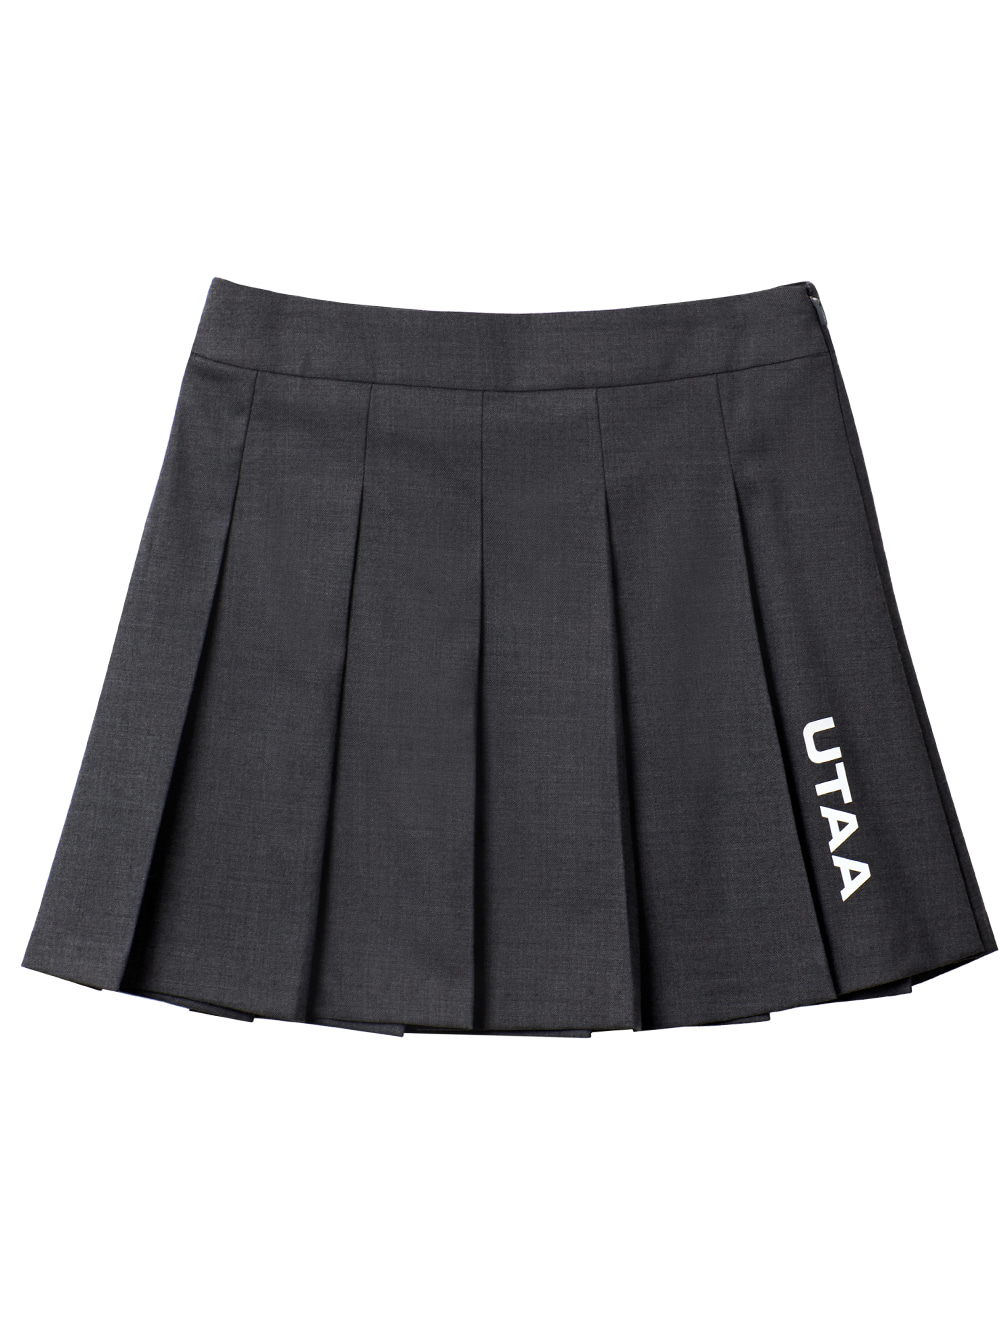 UTAA Basic Logo Flare Fan Skirt : Charcoal Gray (UB2SKF562CG)